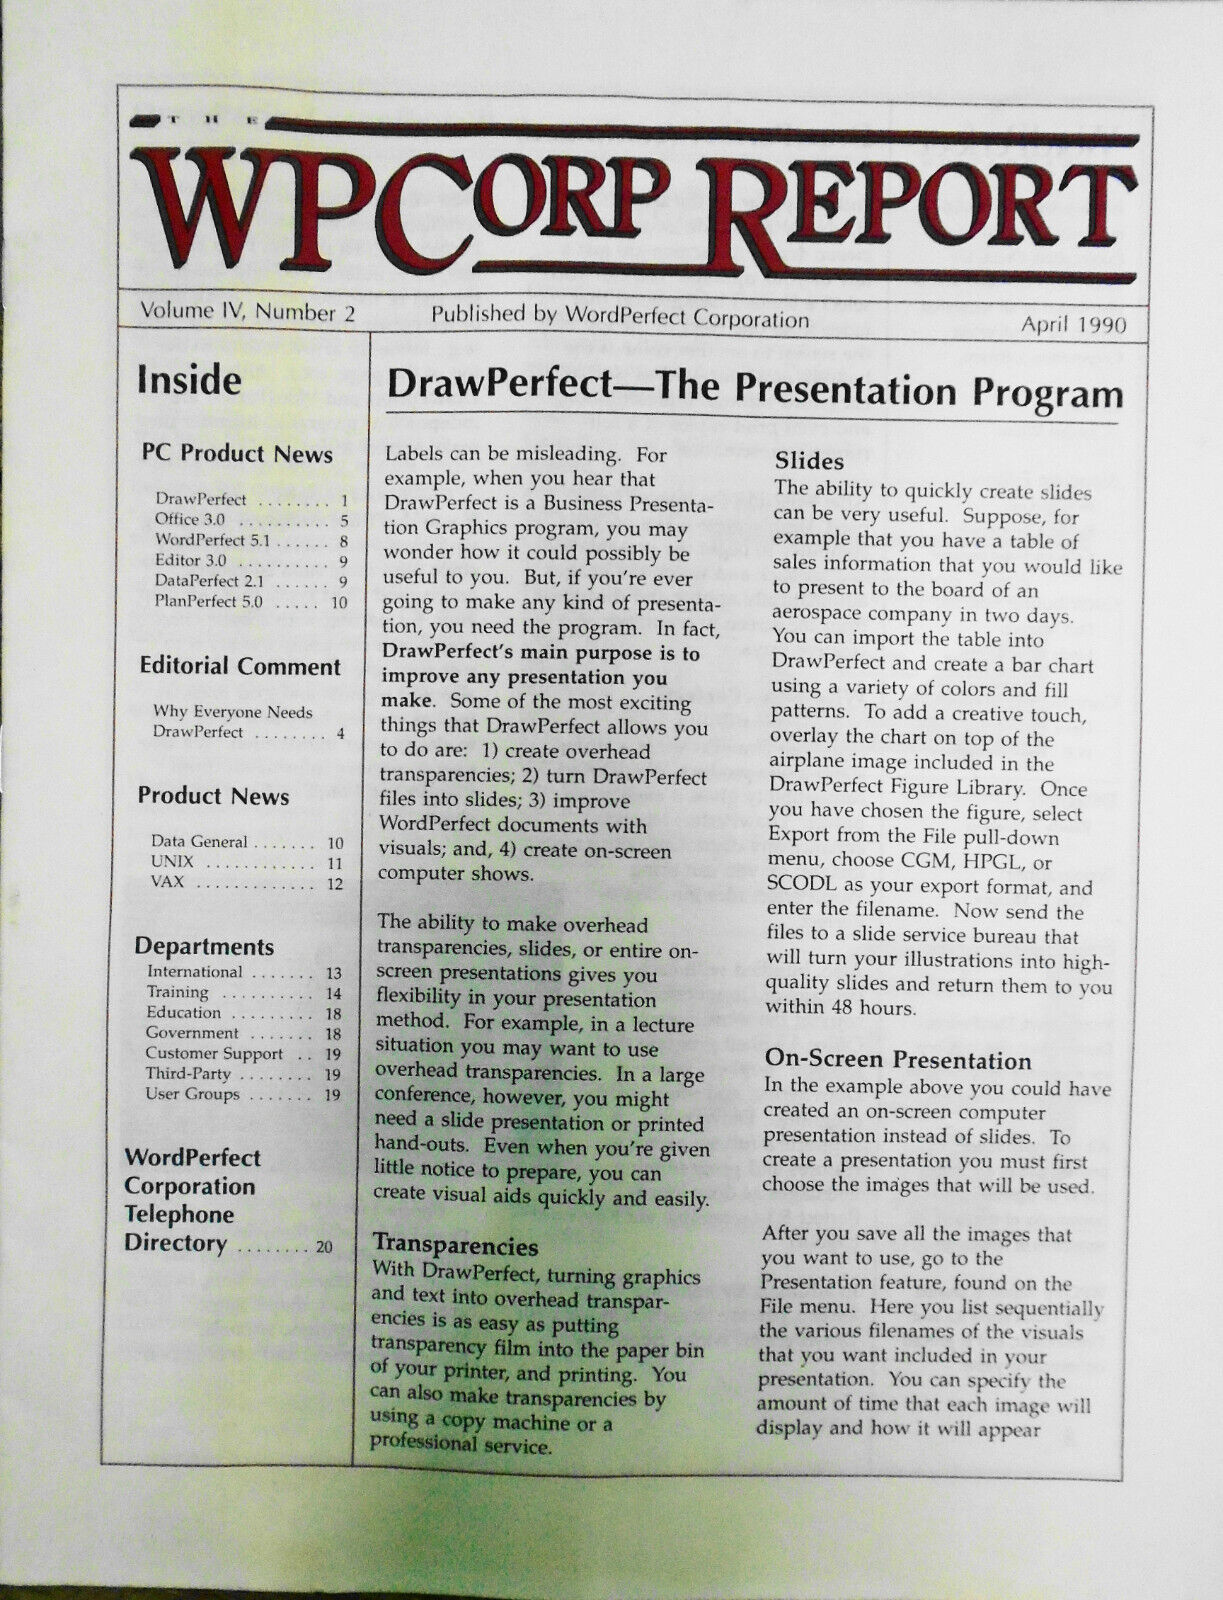 WPCorp Report, April 1990, WordPerfect Corporation